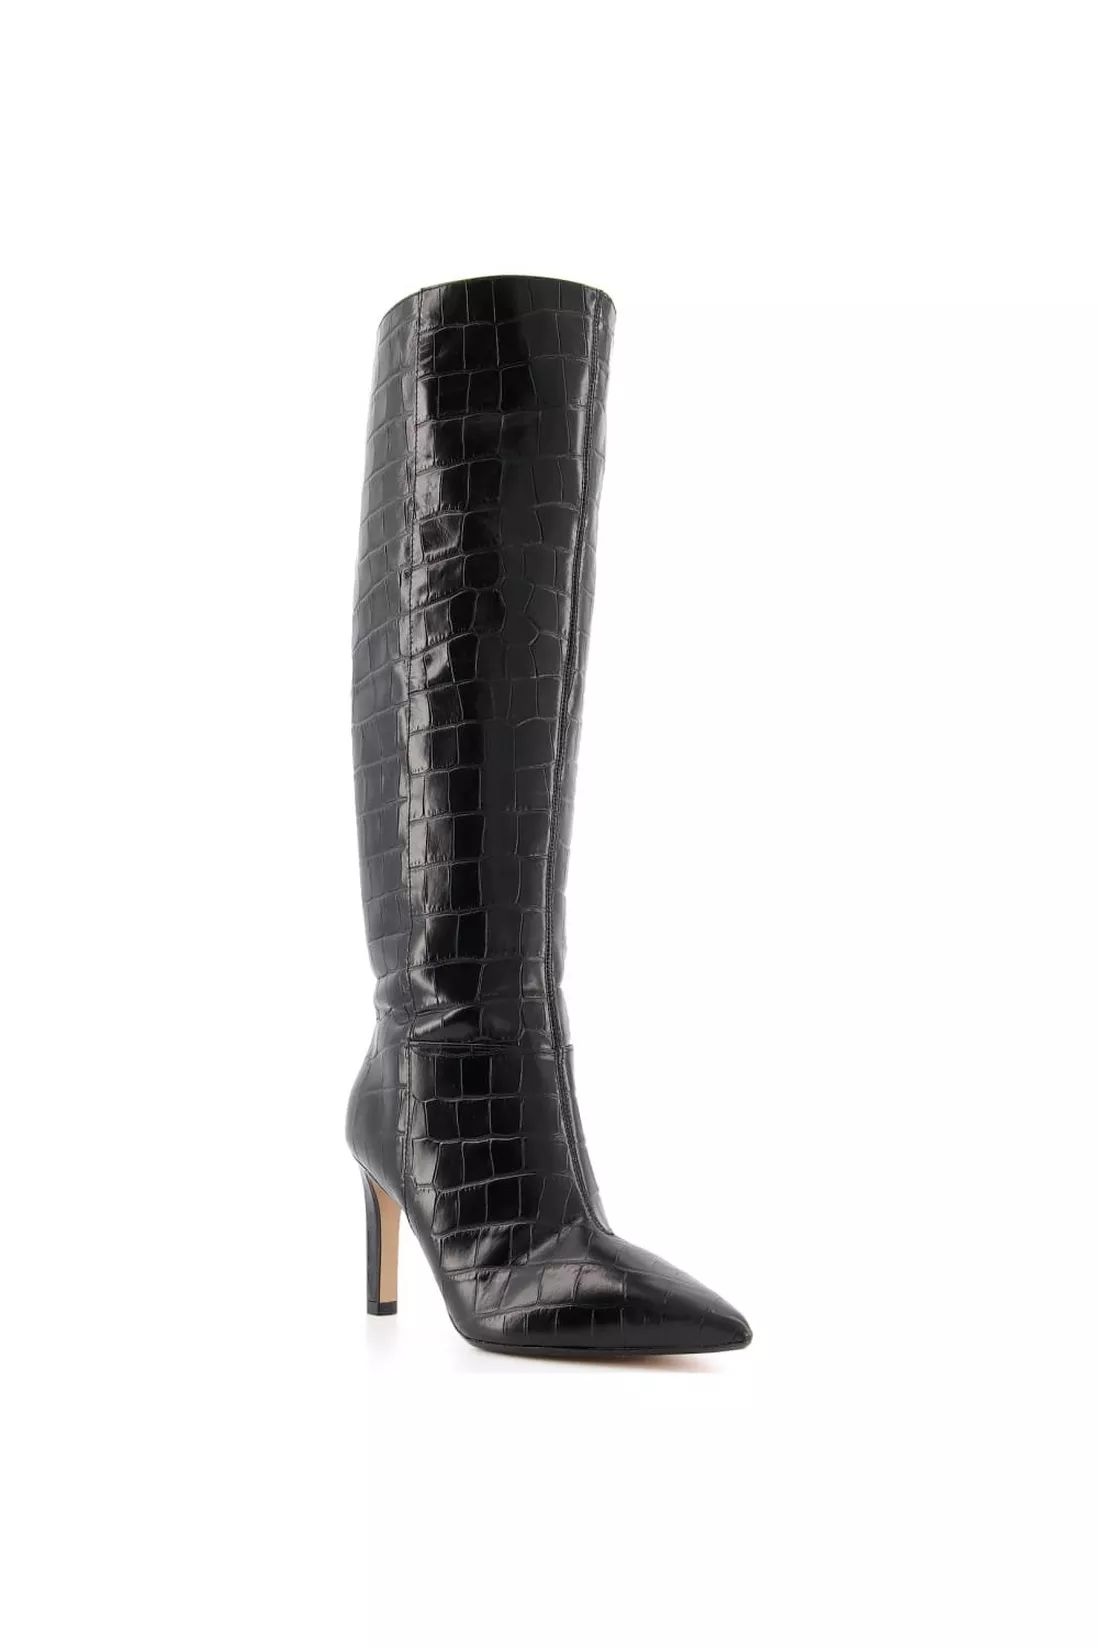 Boots | 'Spice' Leather Knee High Boots | Dune London | Debenhams UK